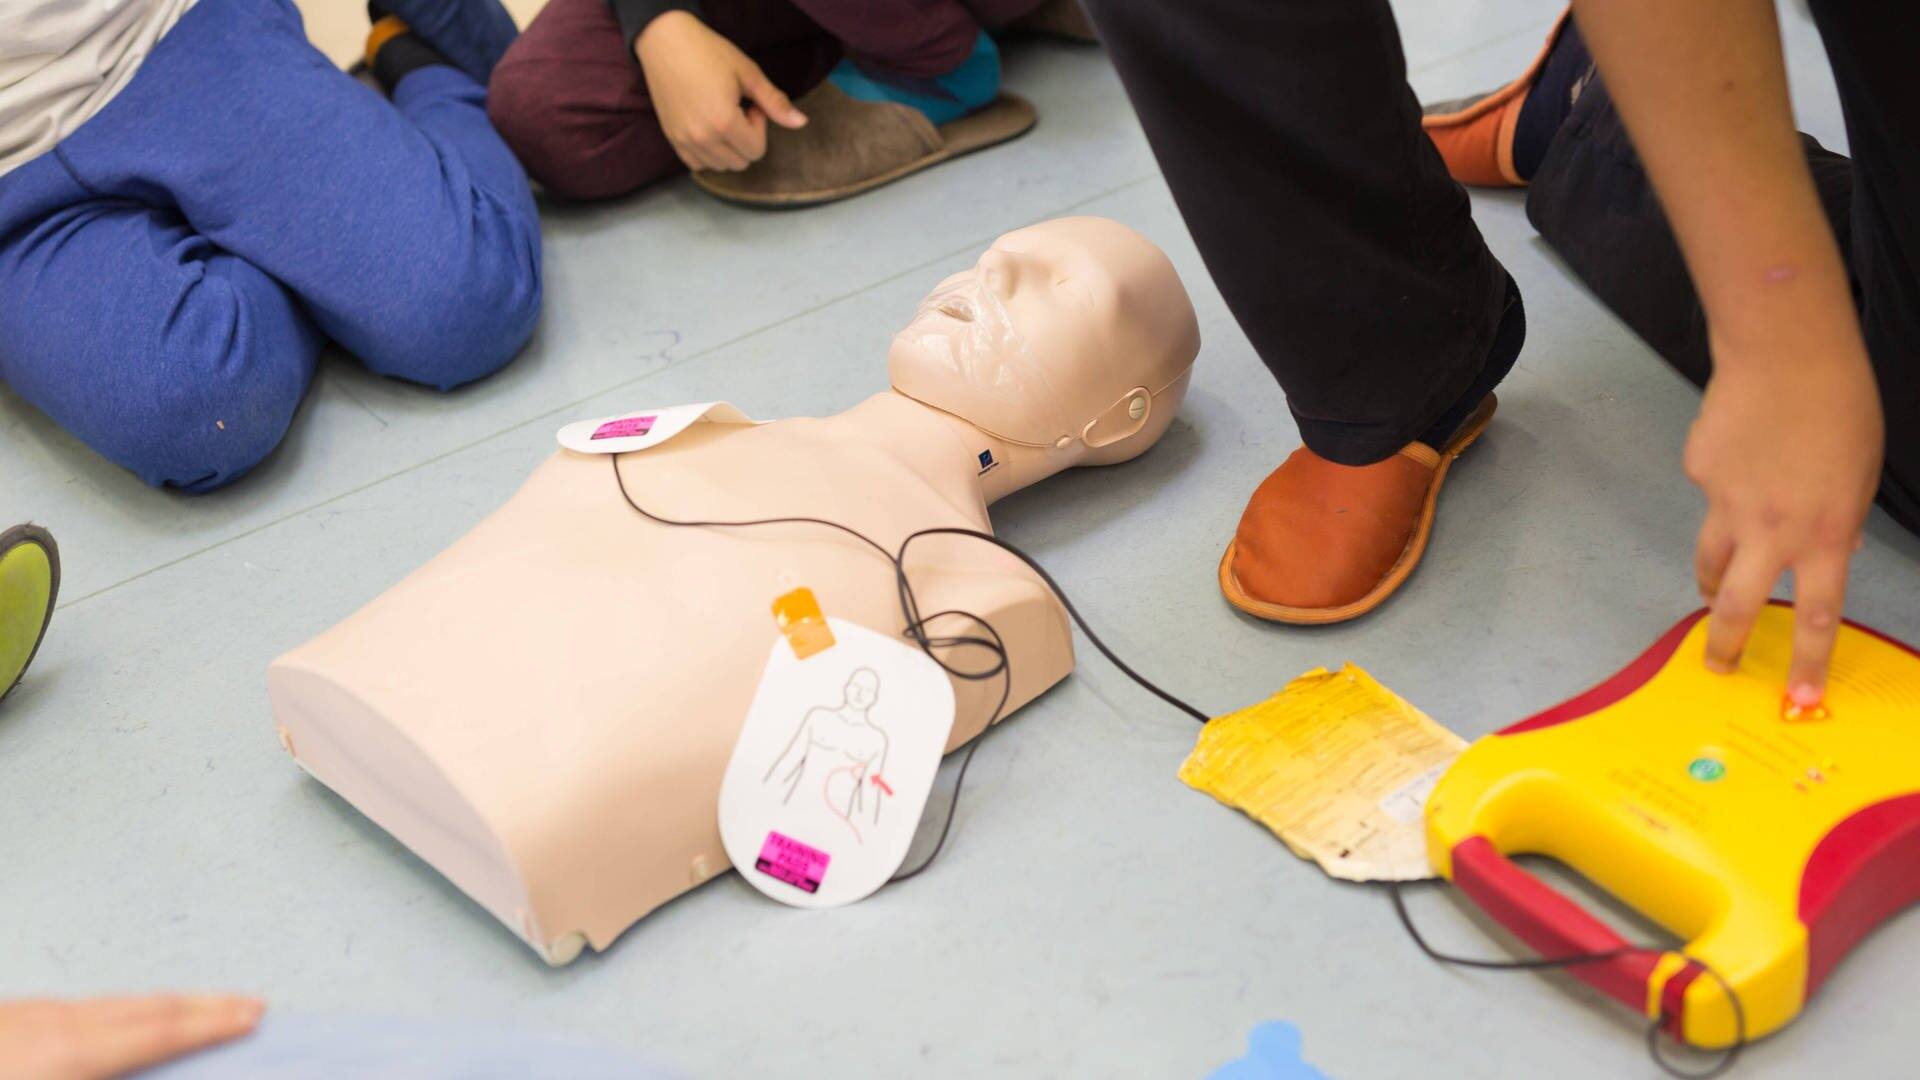 Automatisierter externer Defibrillator (AEM) (Foto: IMAGO, YAY Images)